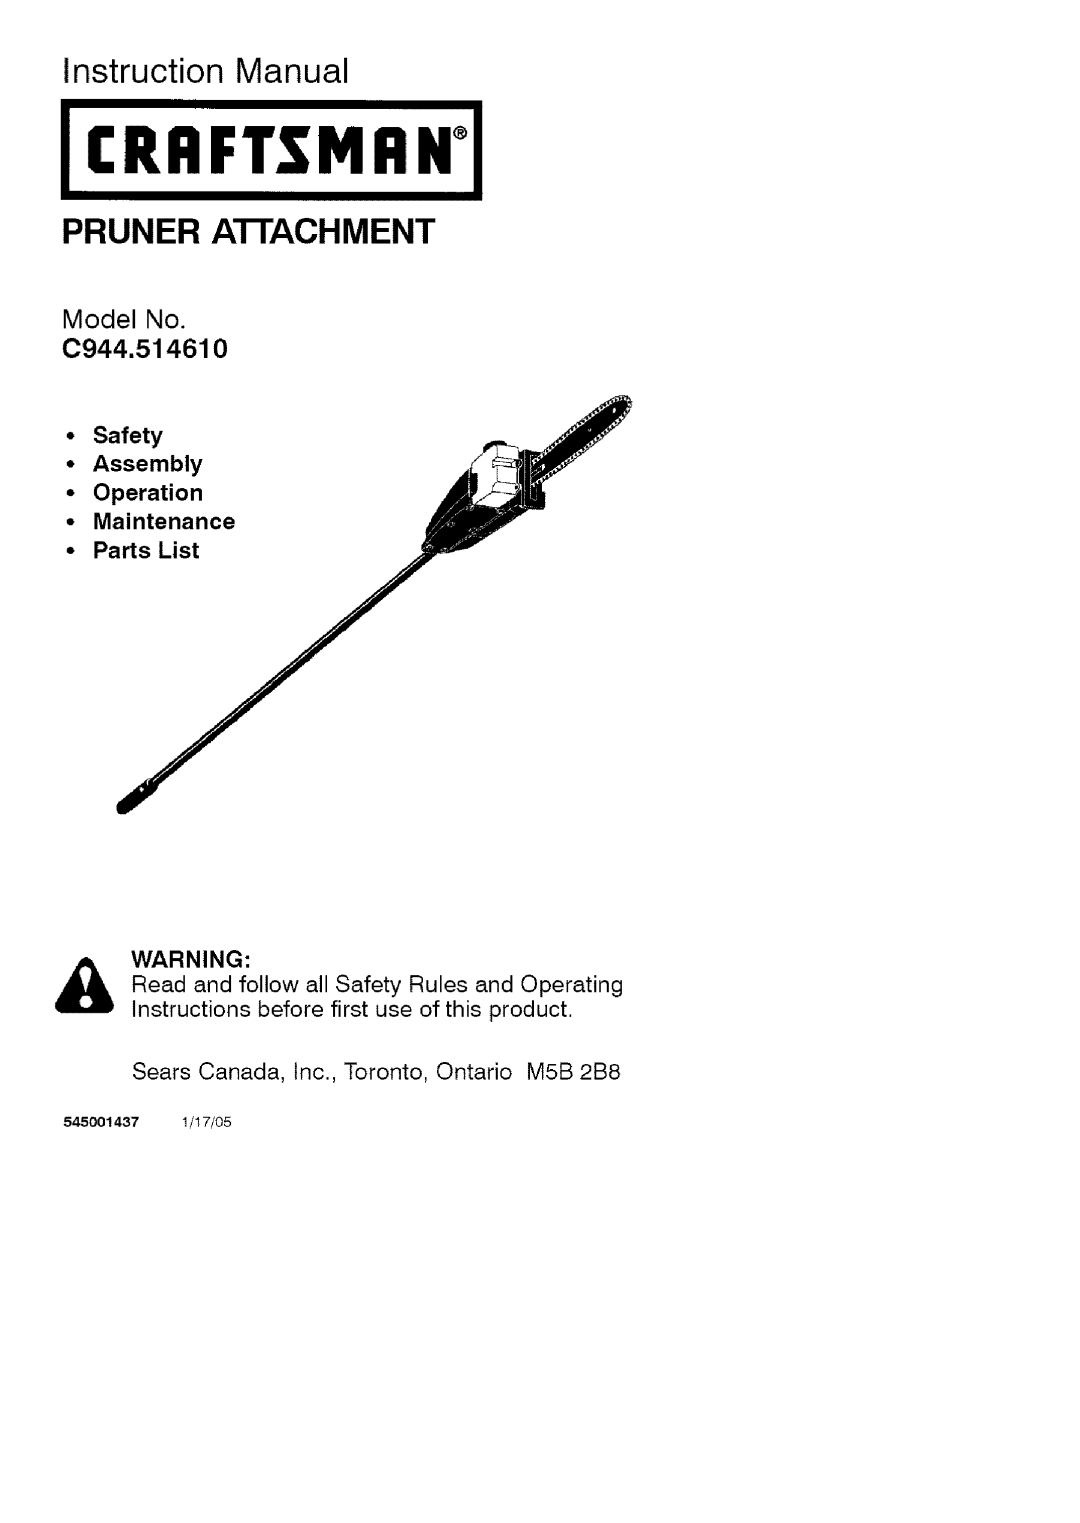 Craftsman 51461 instruction manual J€ Raftsma#J, PRUNER AI-rACHMENT, Safety Assembly Operation Maintenance, Parts List 